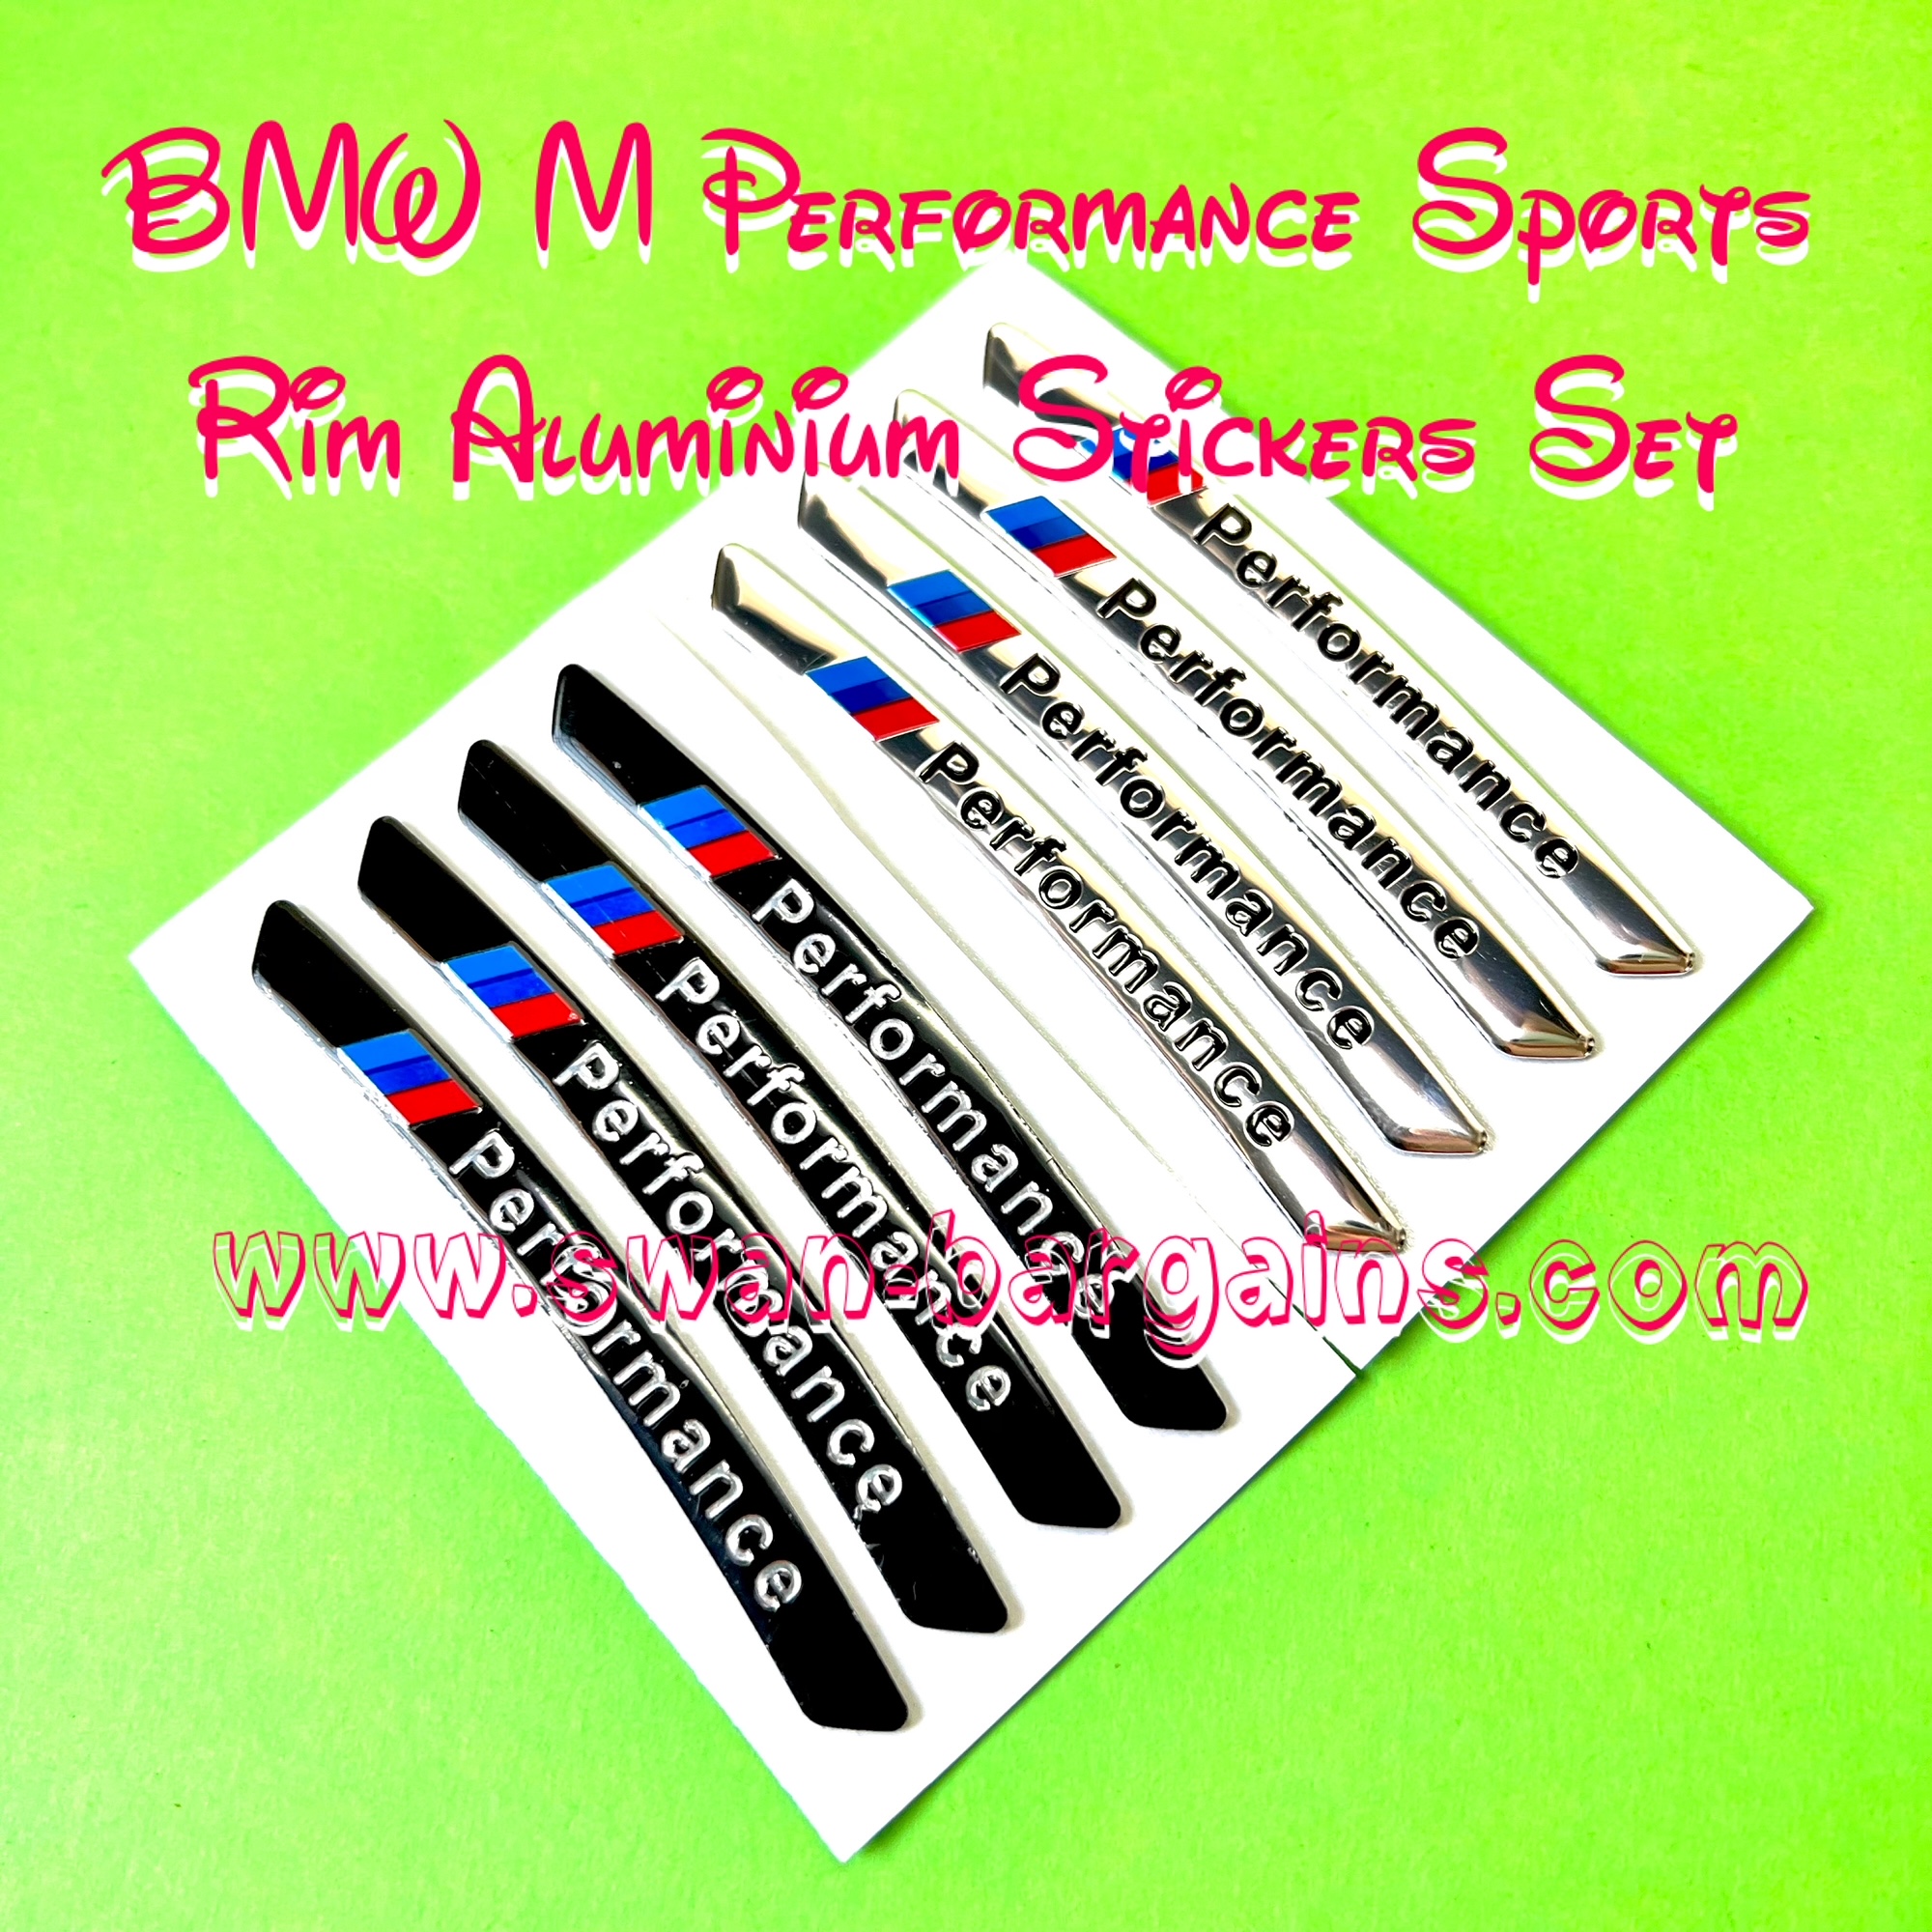 BMW M Performance Sports Rims Aluminum Decorative Sticker Singapore